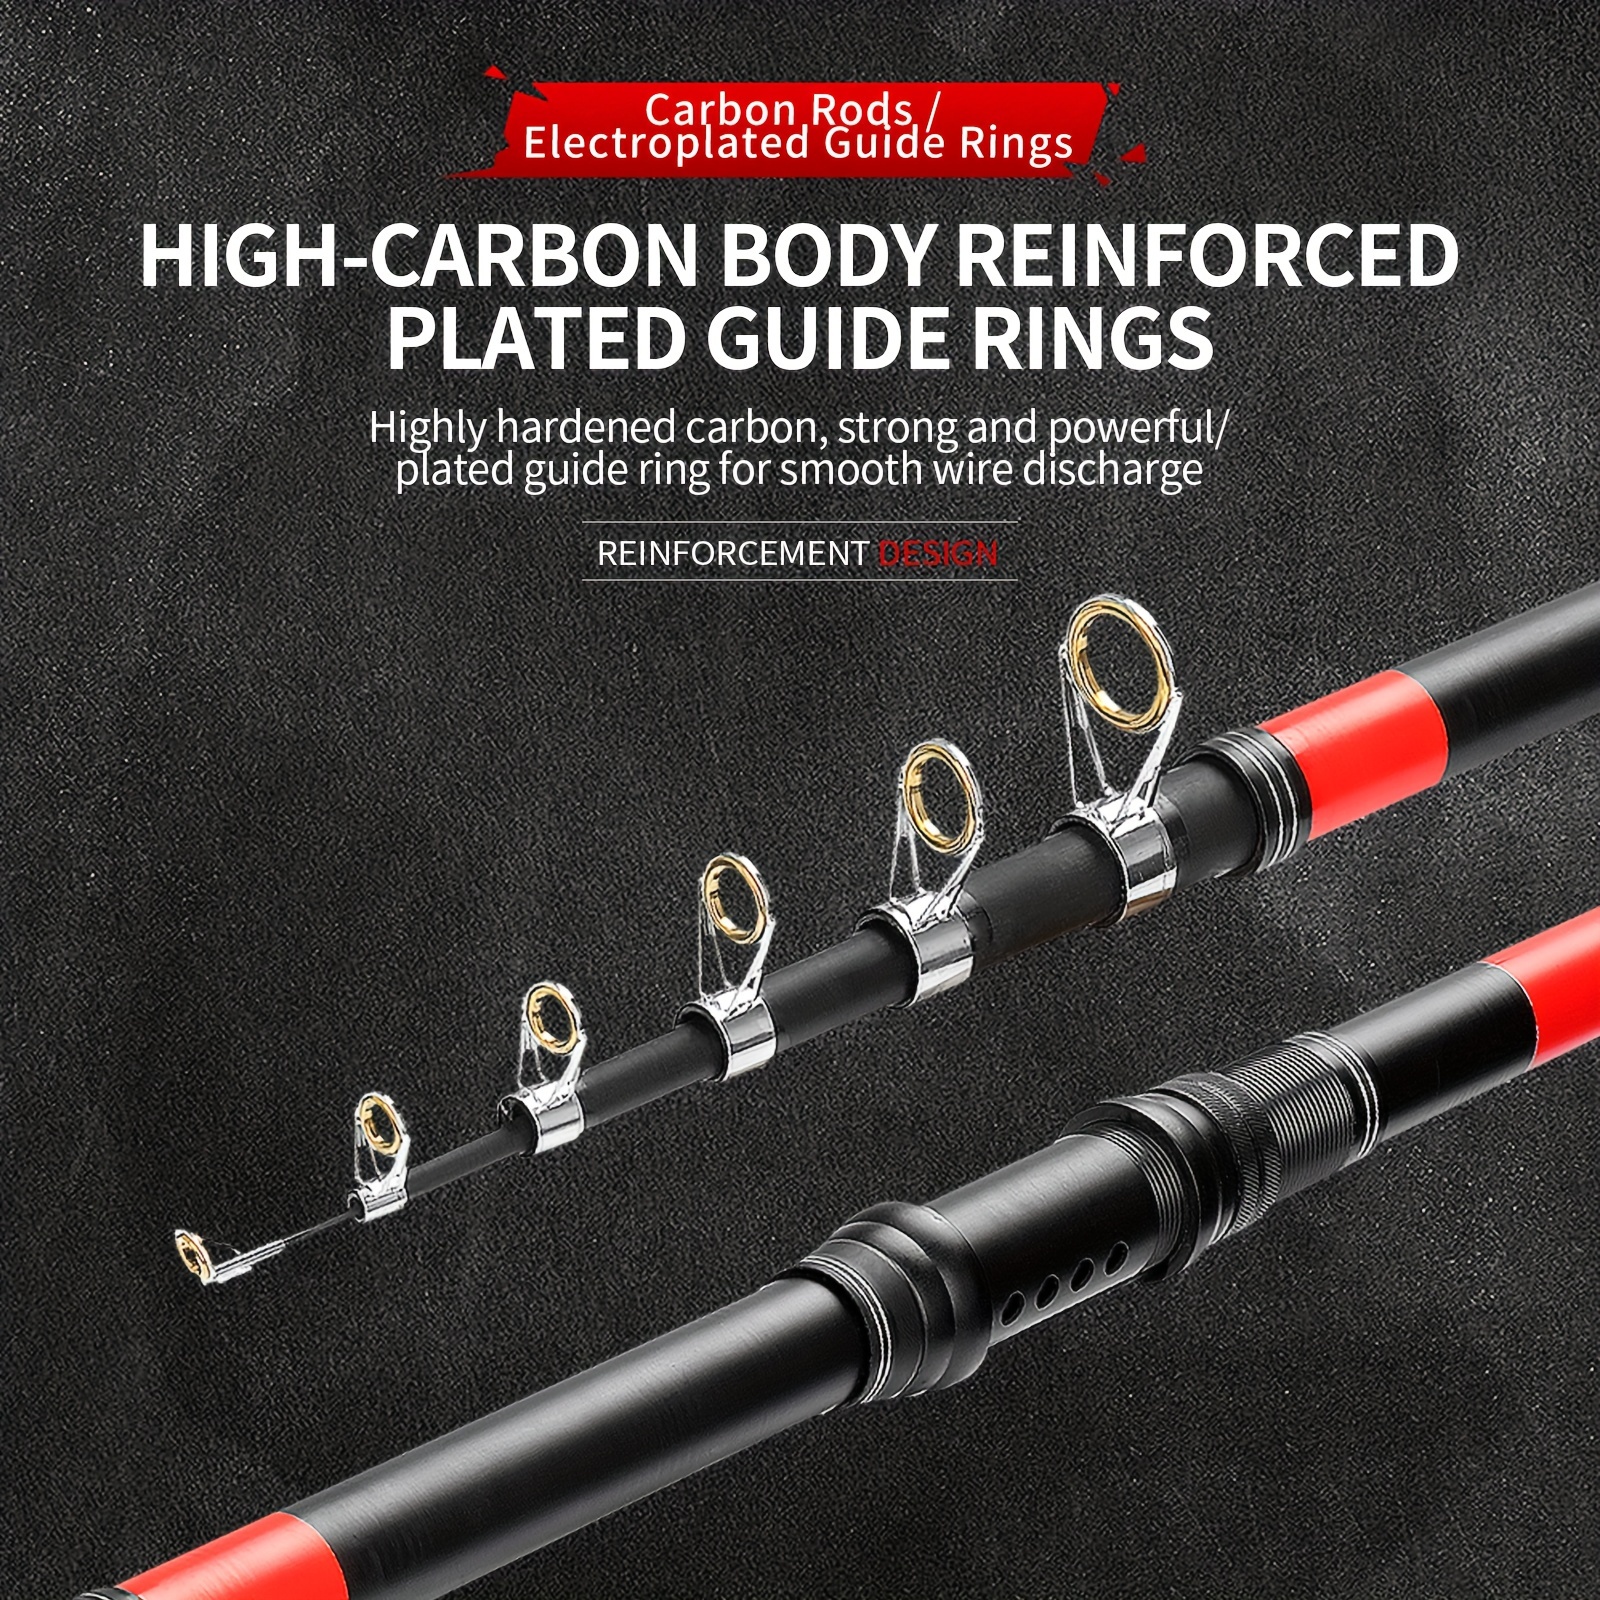 Haut Ton Telescopic Fishing Rod Stainless Steel Fishing Pole - Temu Canada